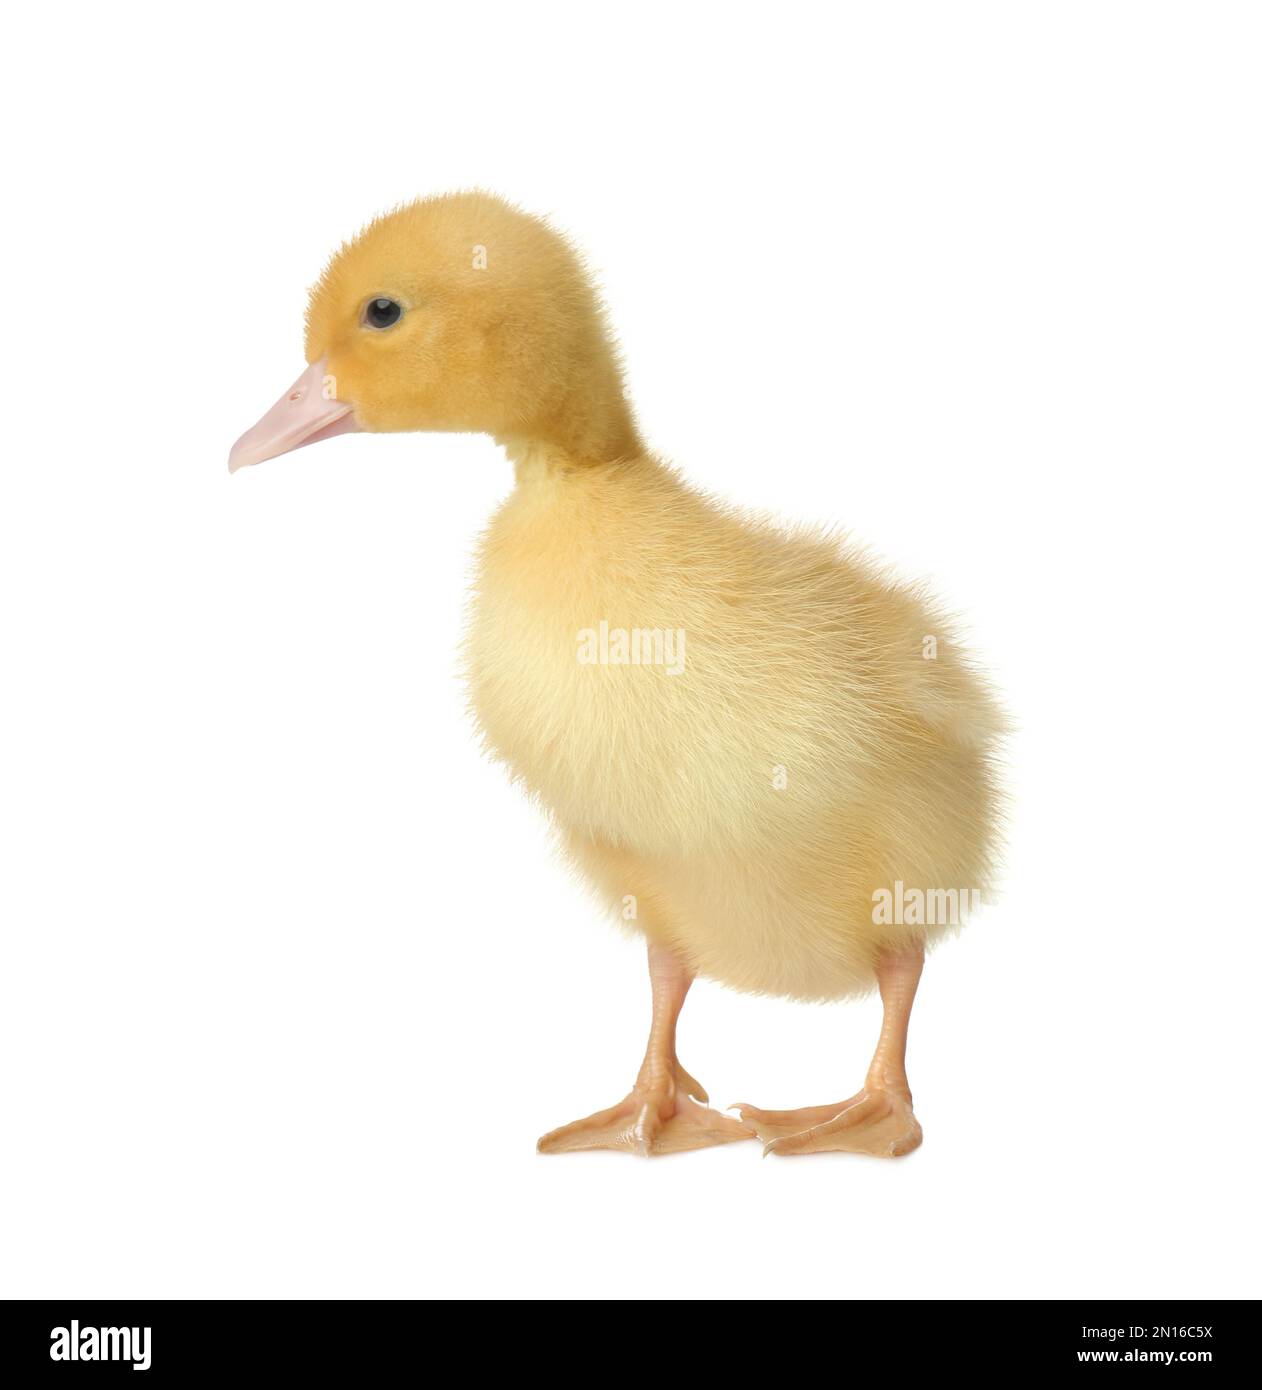 Cute fluffy gosling on white background. Farm animal Stock Photo